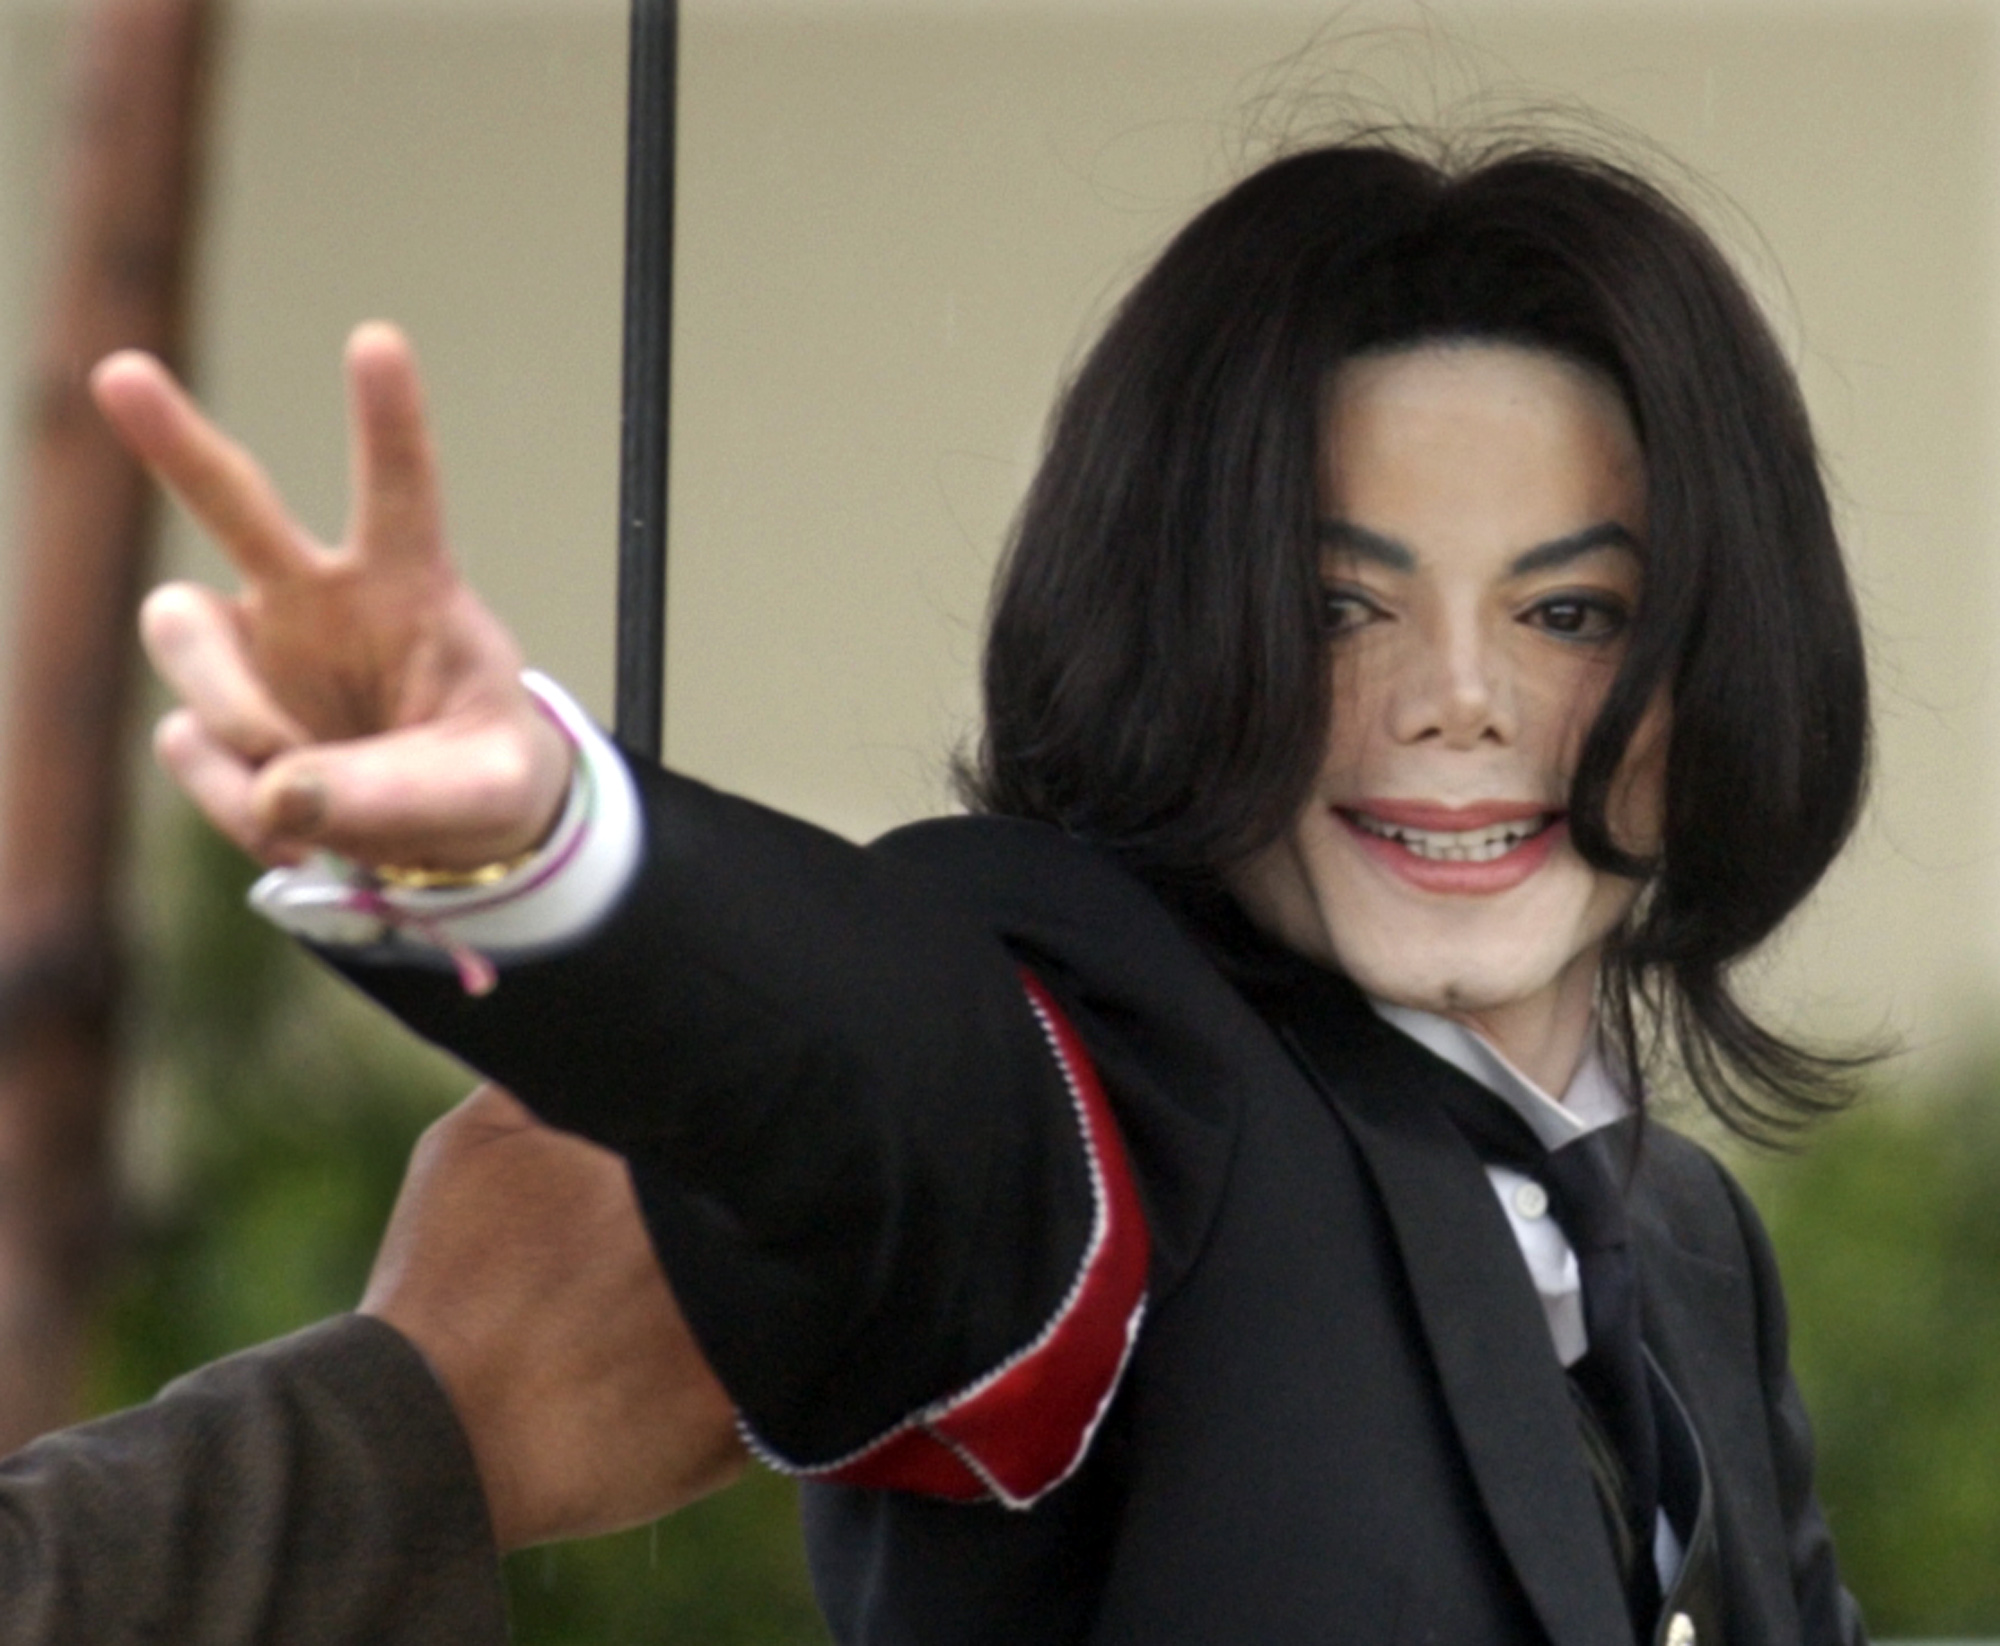 Michael Jackson, Discovery Channel, Död, Namninsamling, Obduktion, Protest